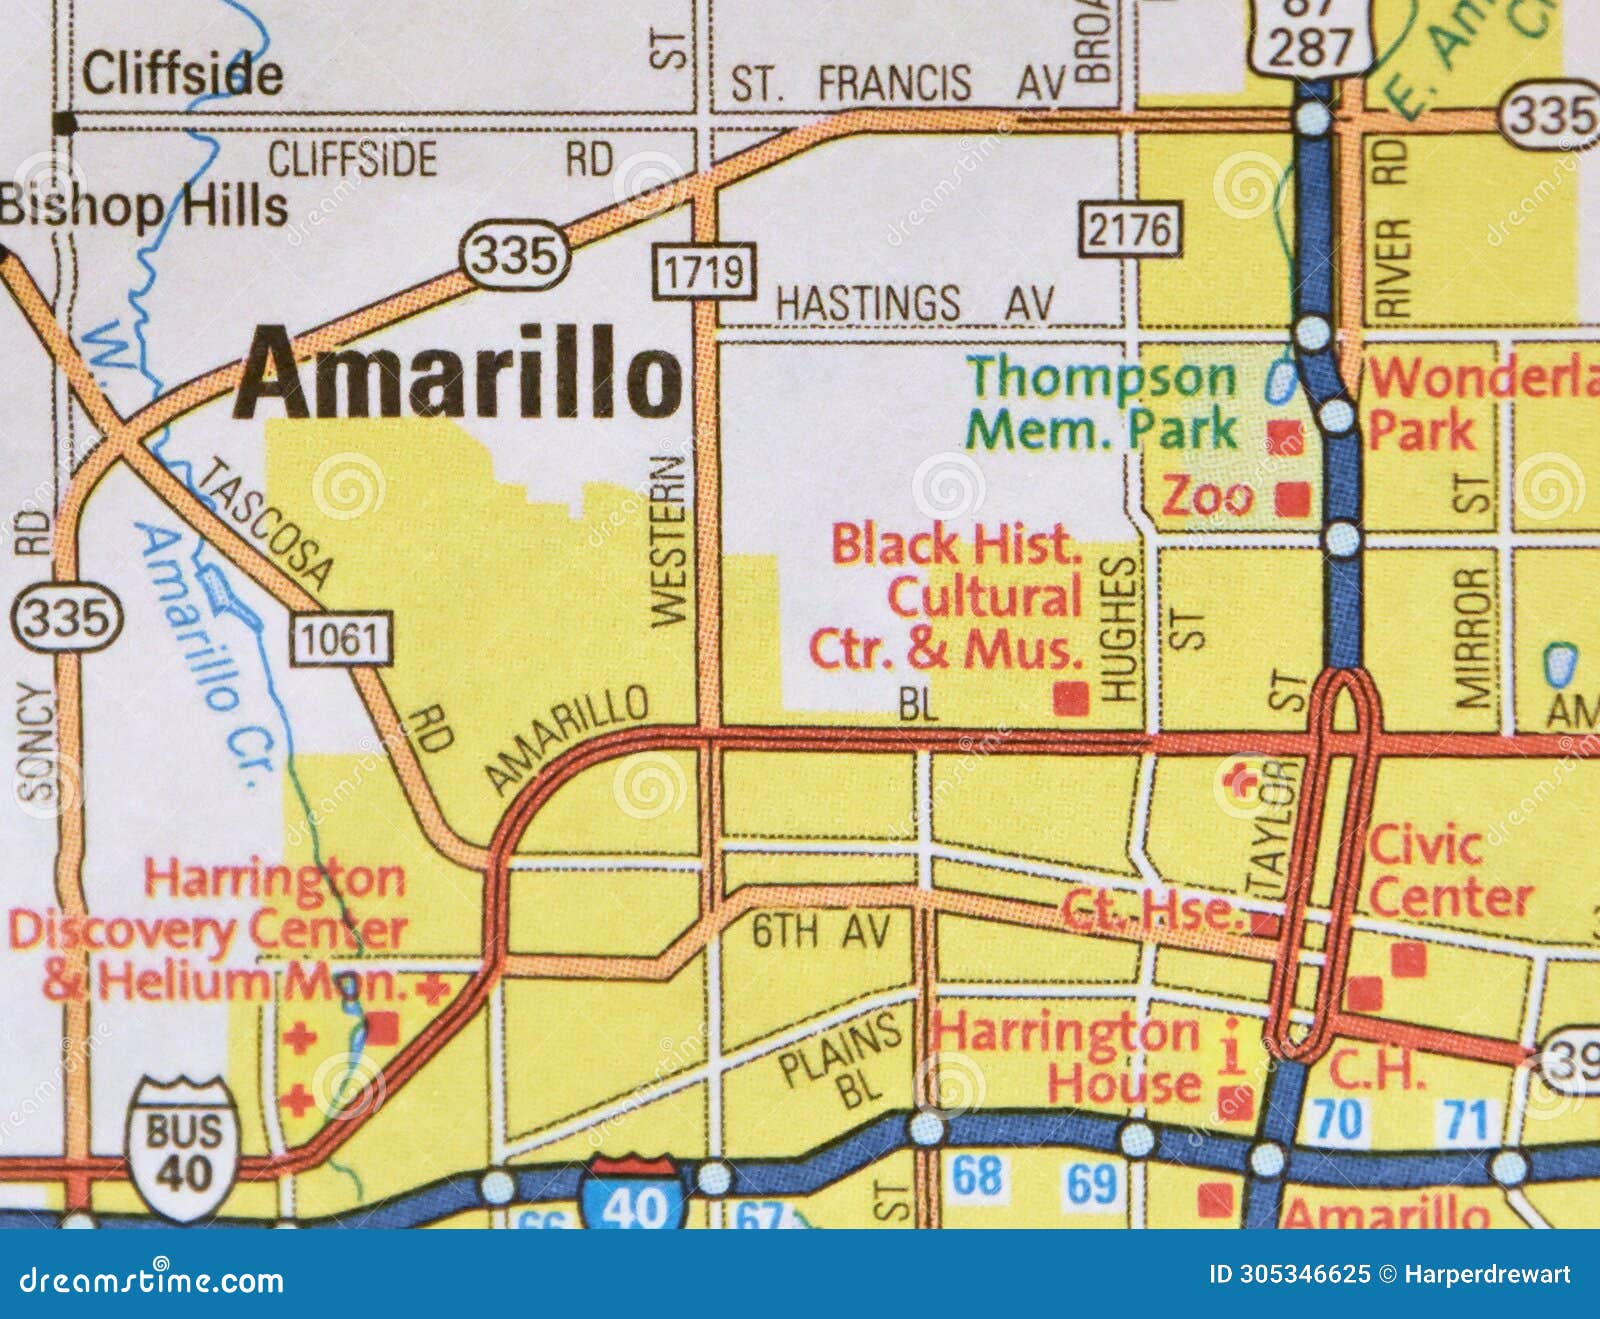 map image of amarillo, texas